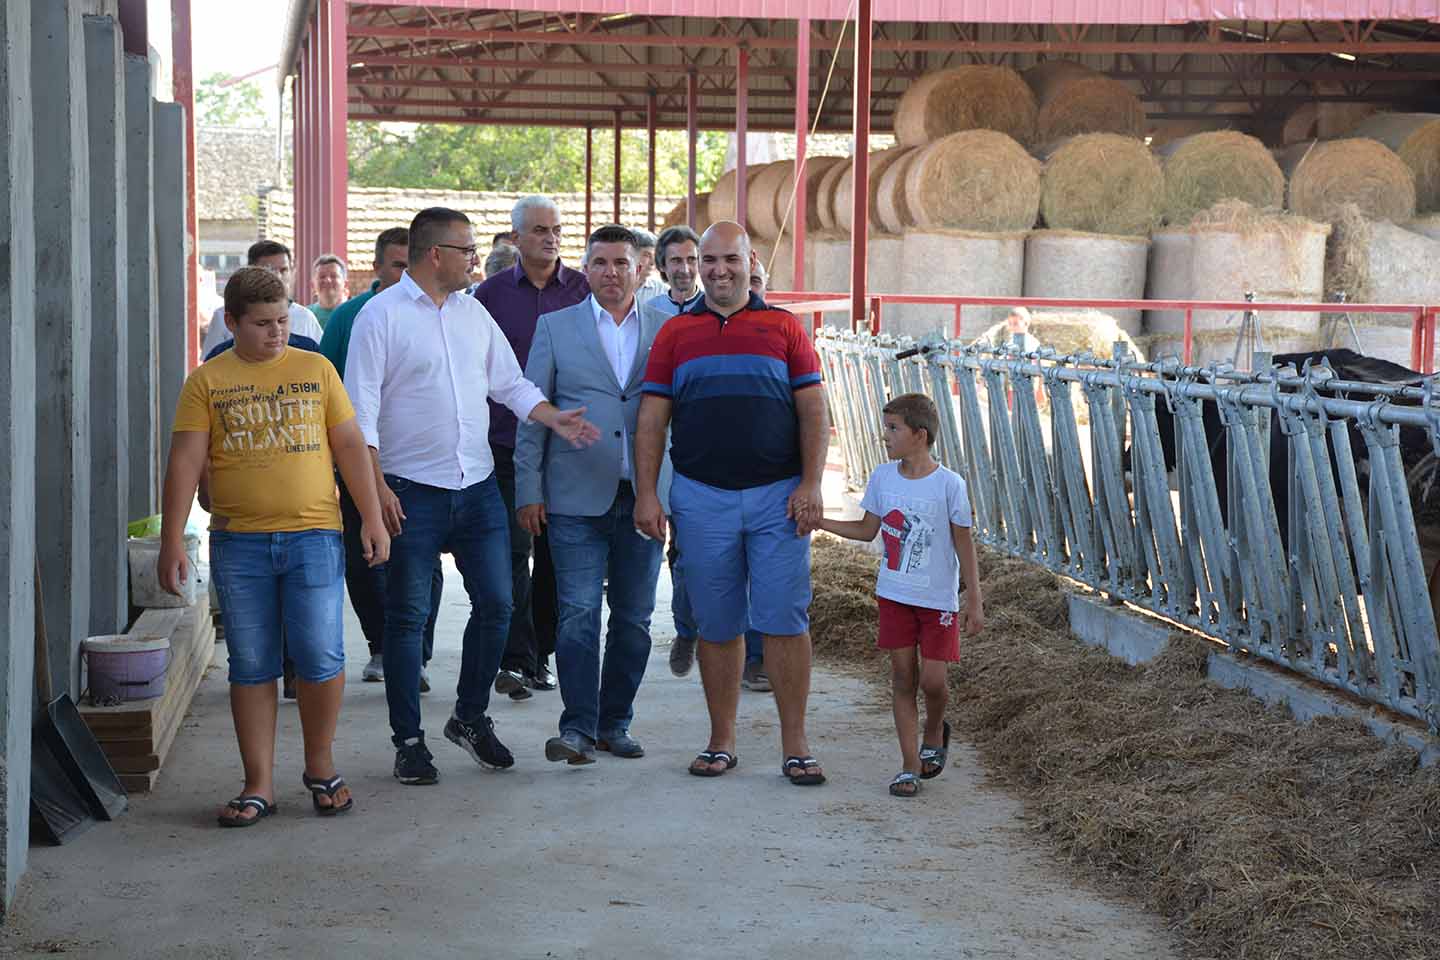 Ministar poljoprivrede posetio Sakule: OBILAZAK FARME I RAZGOVOR SA SAKULSKIM POLJOPRIVREDNICIMA  (VIDEO)